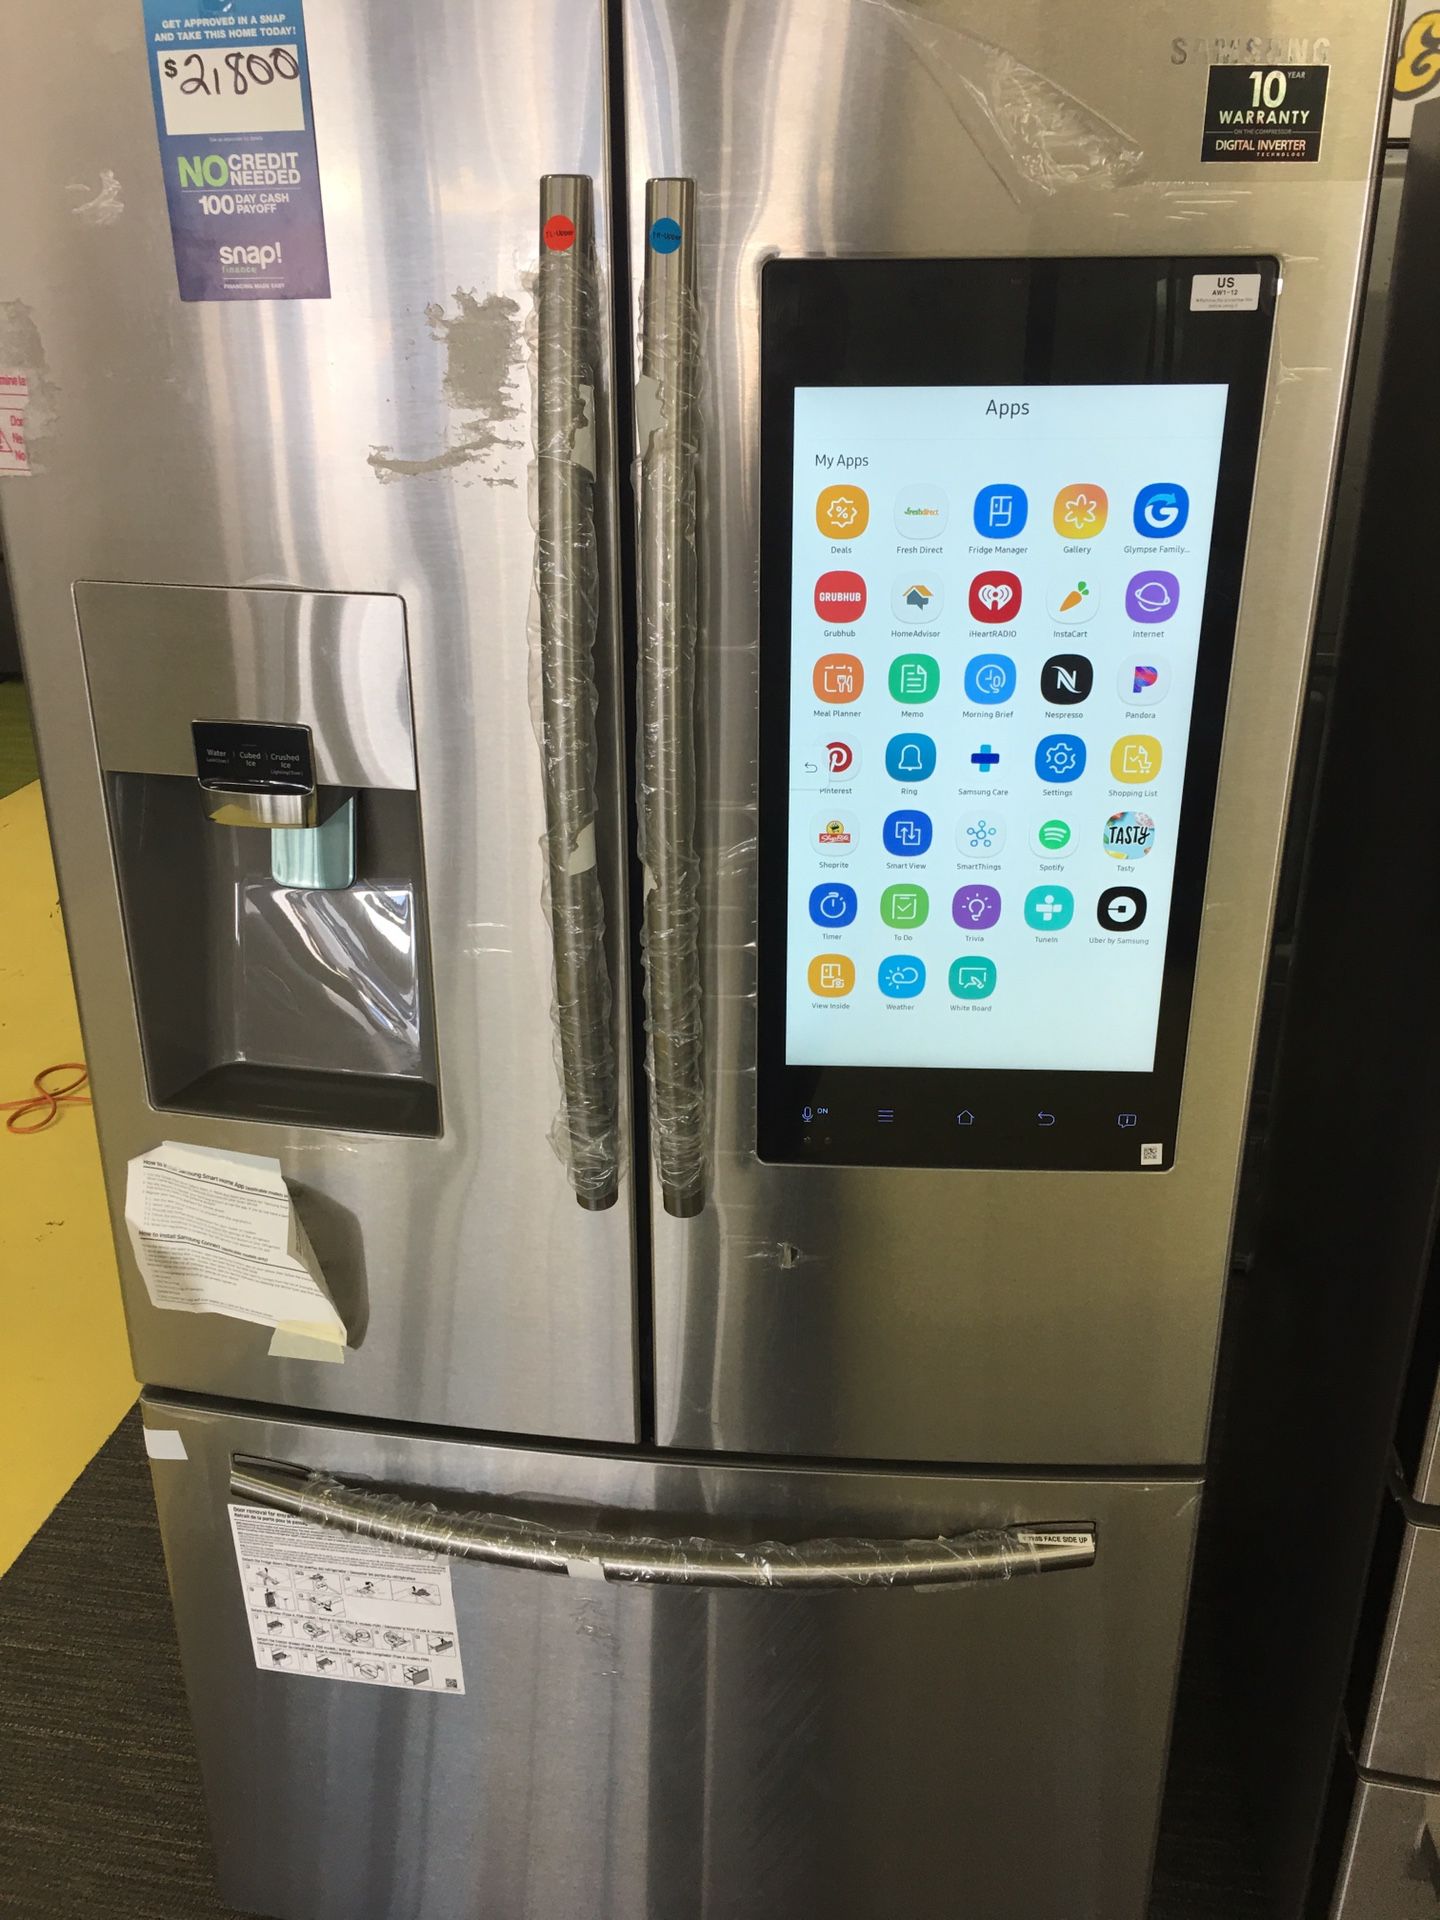 Brand New Samsung Stainless Steel Family Hub Frech Door Refrigerador With Warranty No Credit Needed